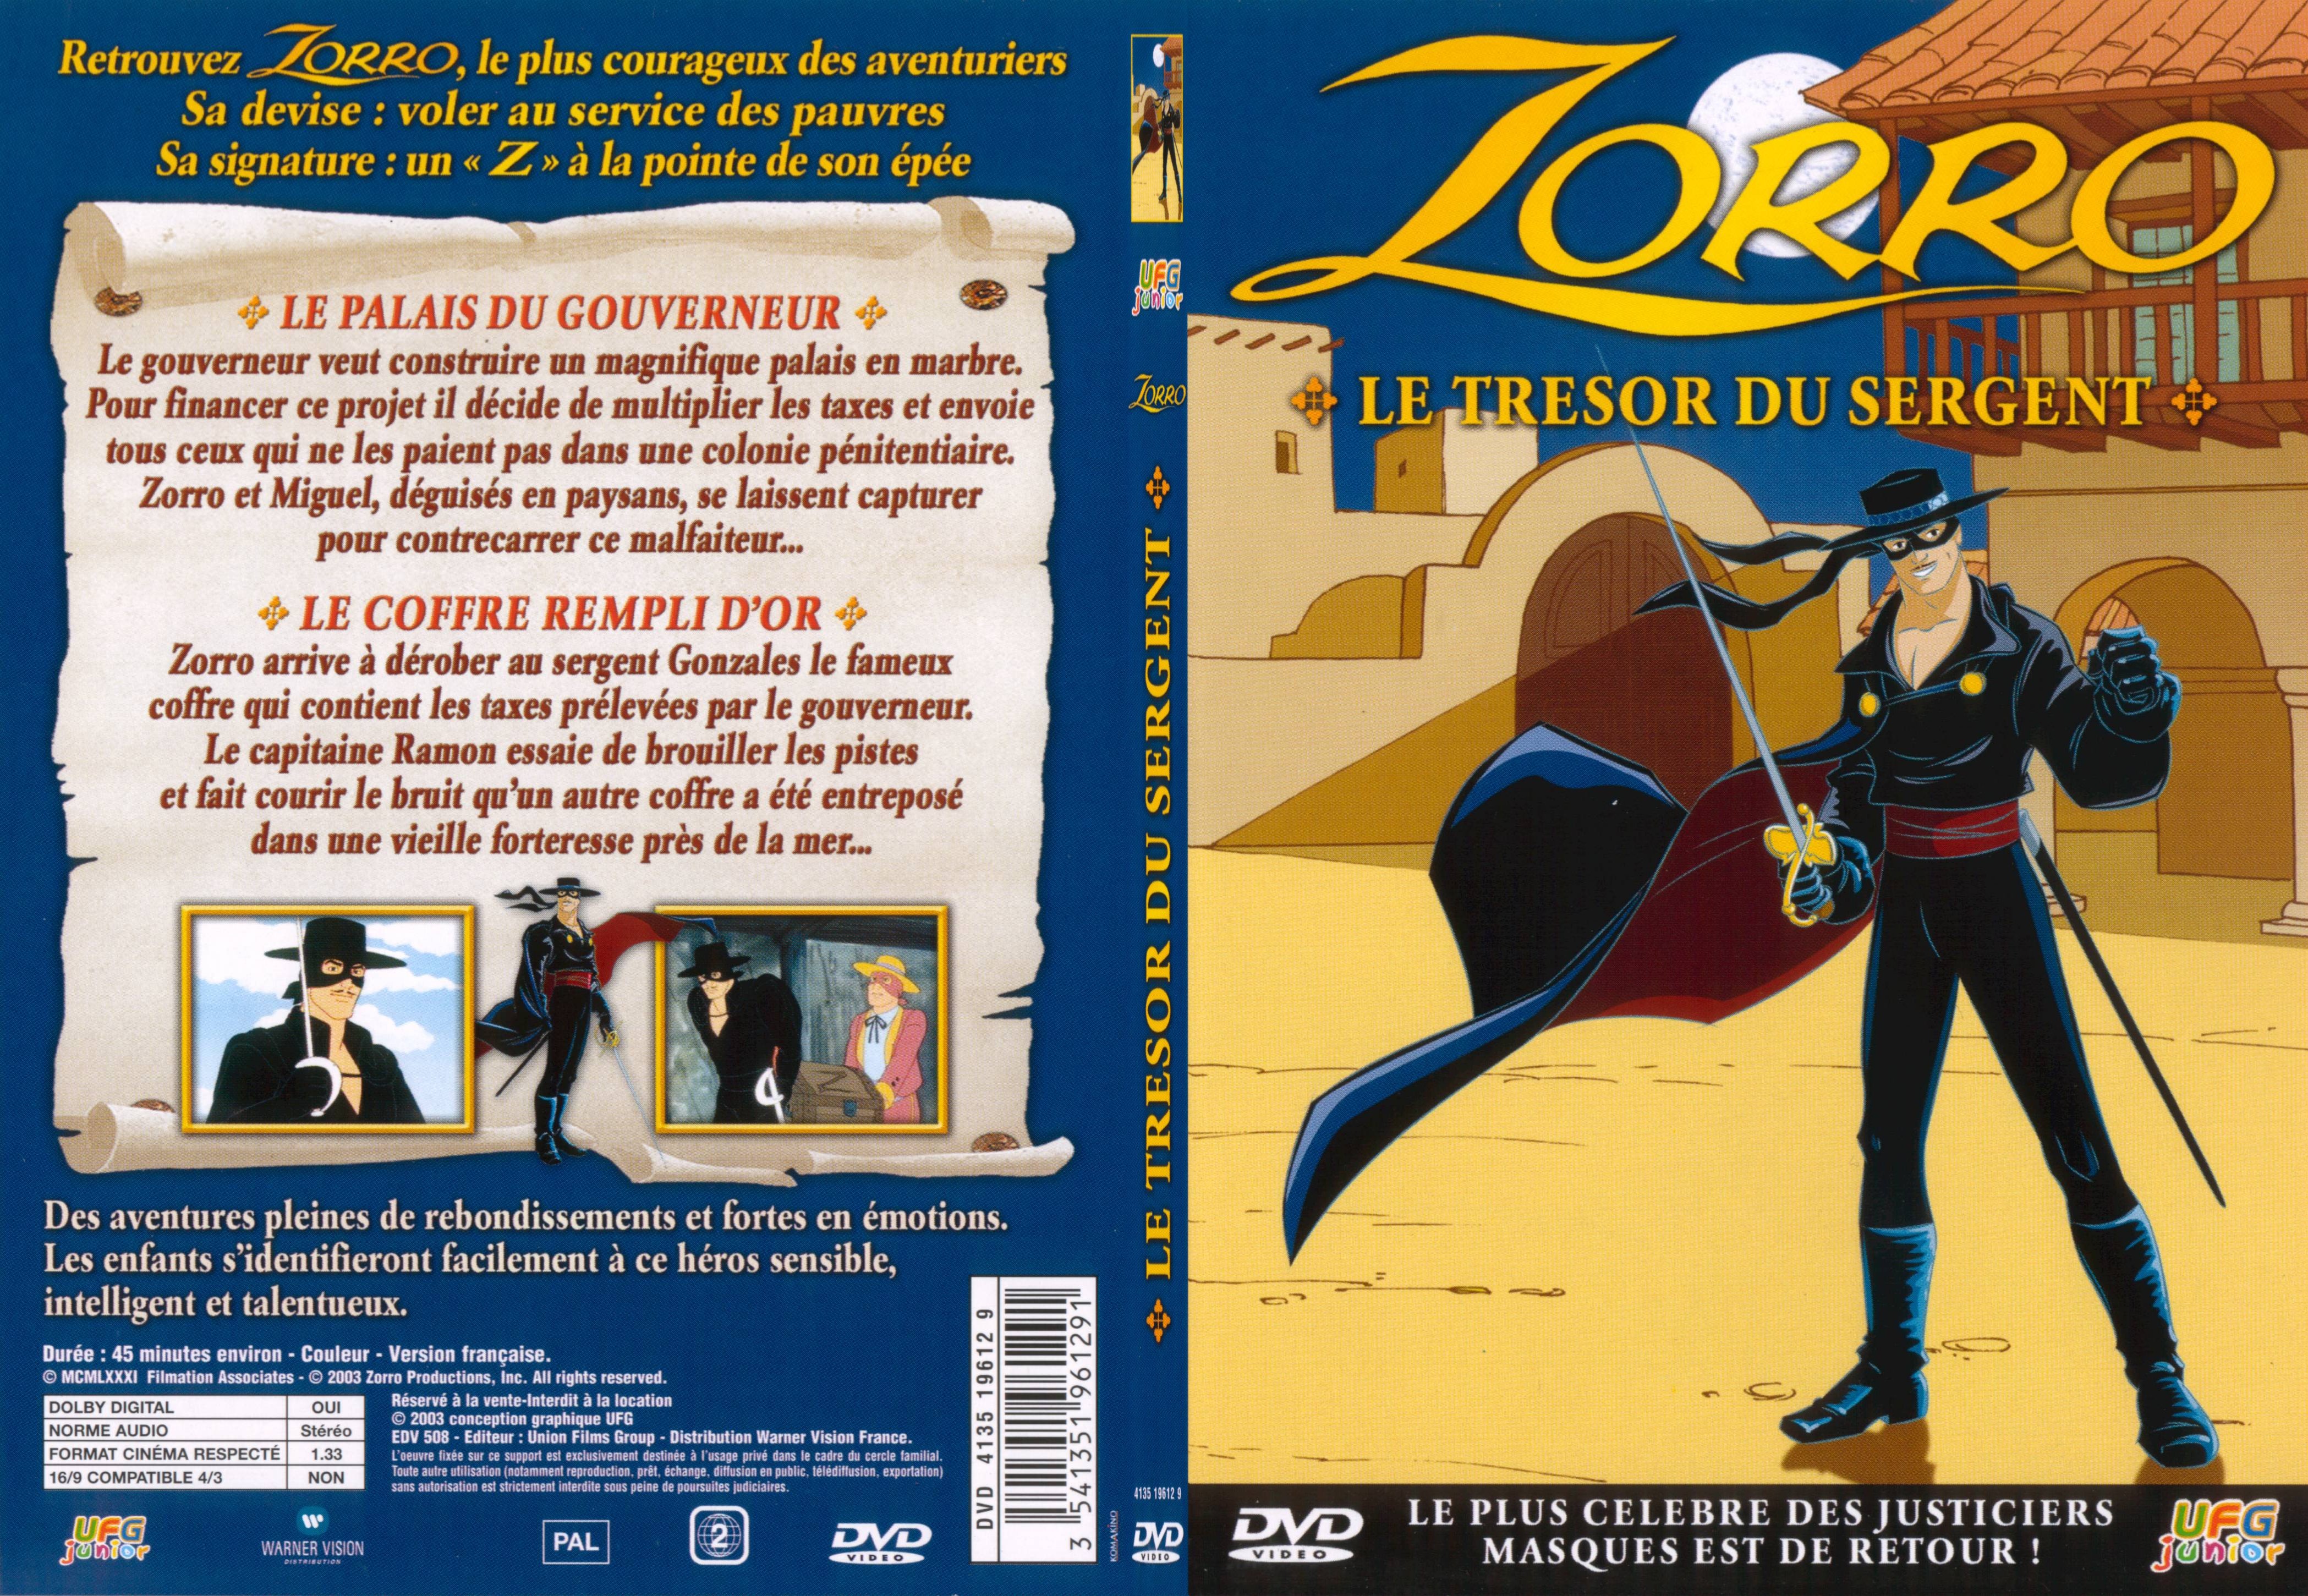 Jaquette DVD Zorro le trsor du sergent - SLIM